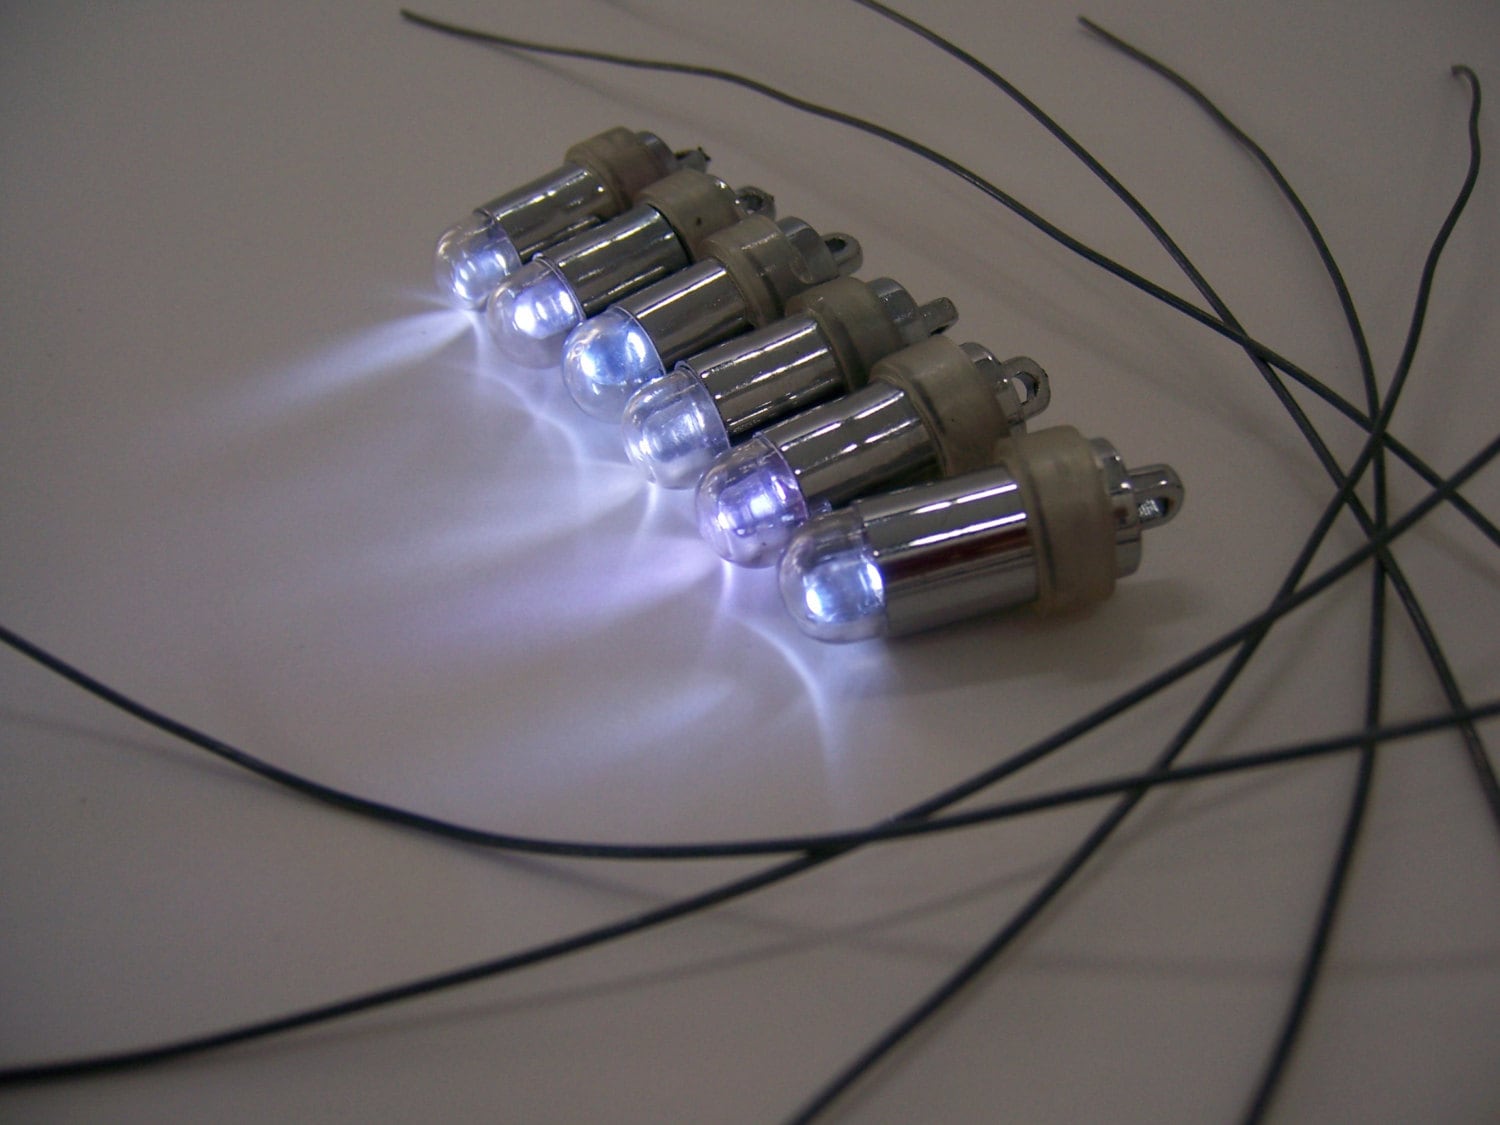 miniature 12 volt led lights